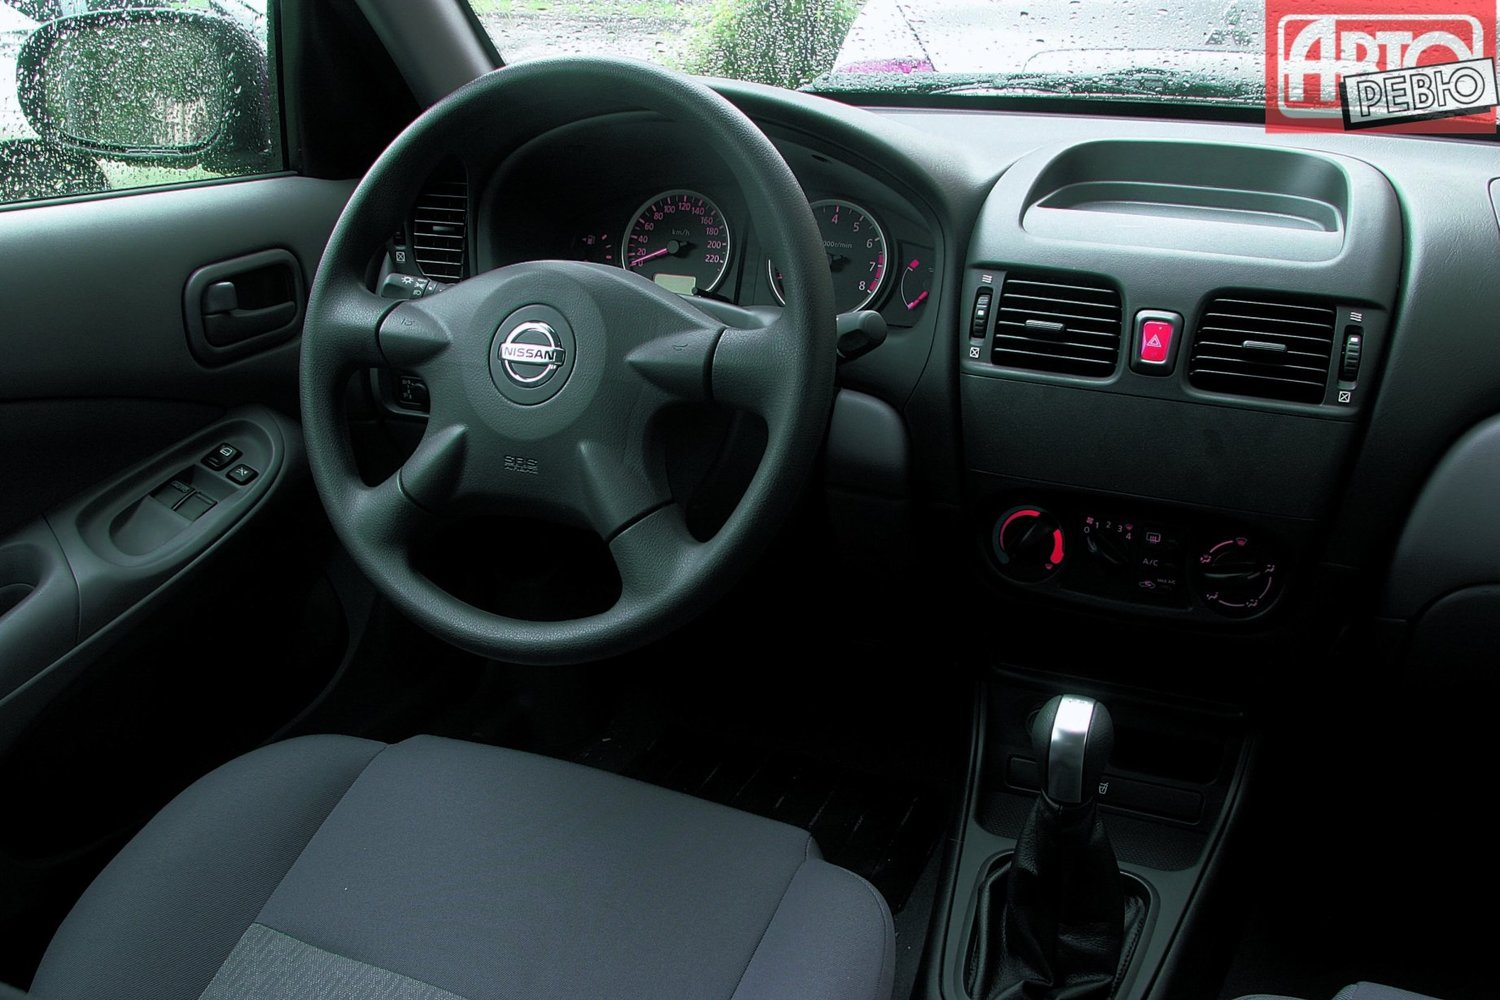 седан Nissan Almera 2003 - 2006г выпуска модификация 1.5 MT (82 л.с.)